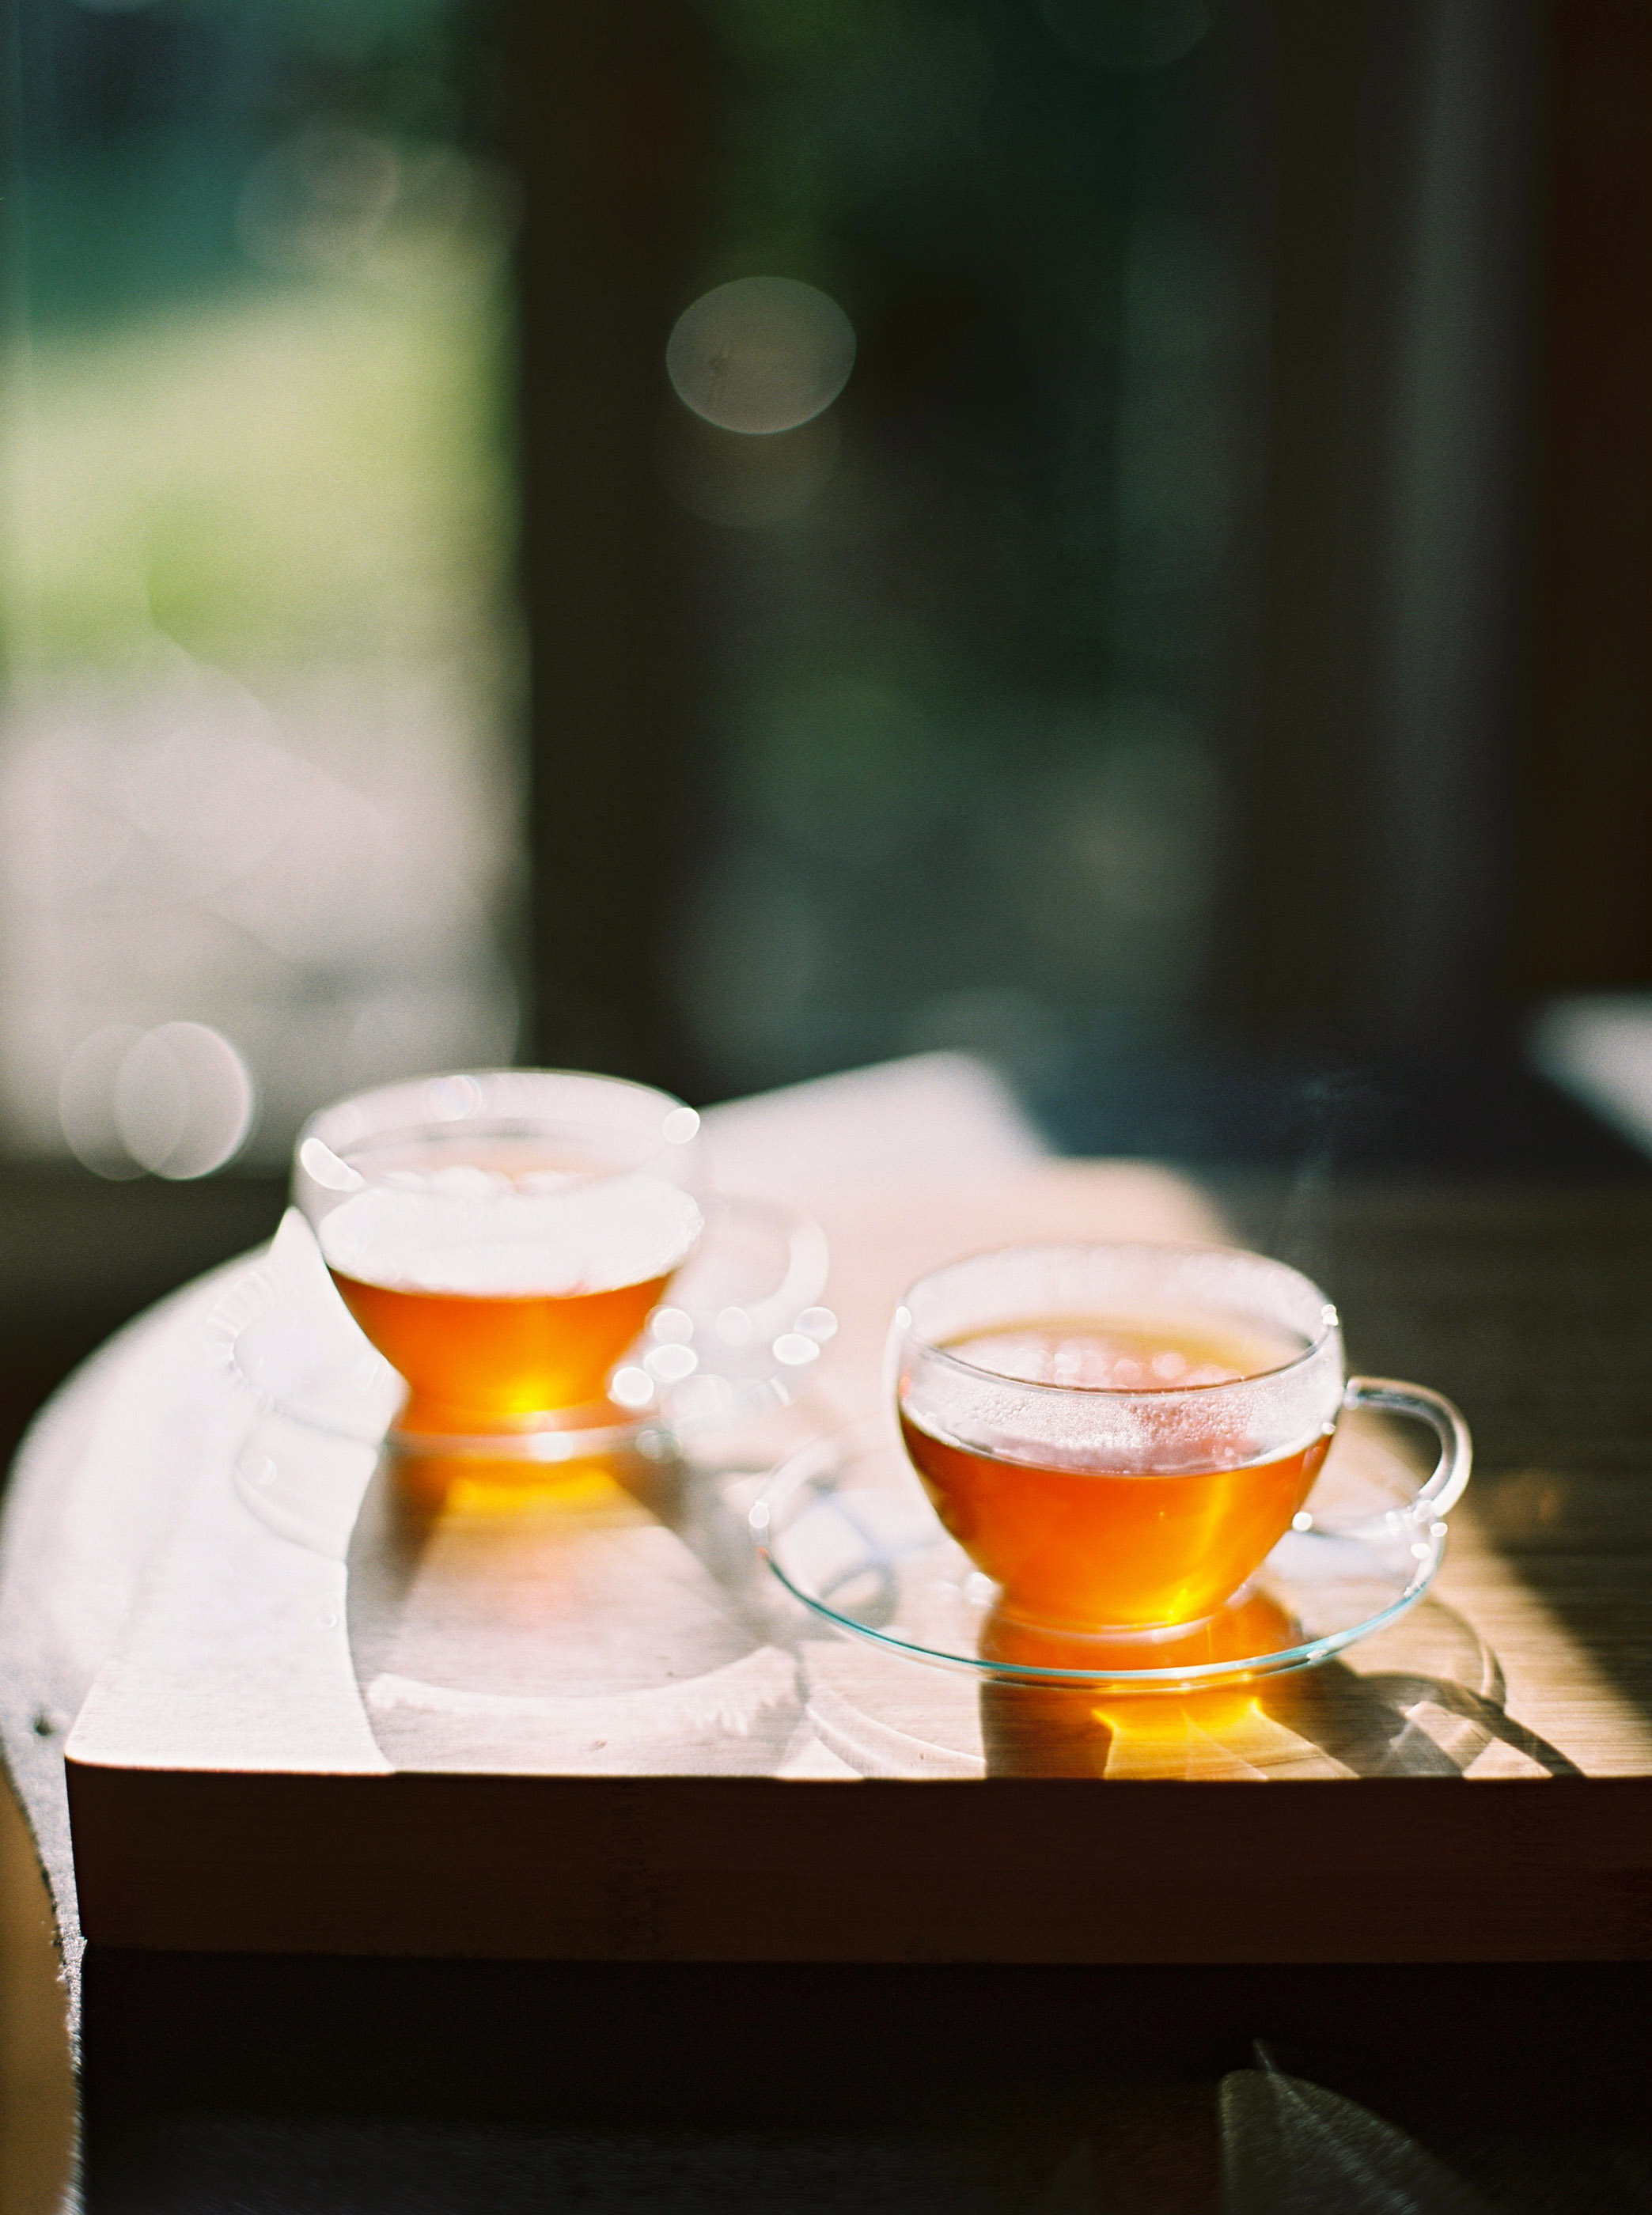 nicholas-lau-nicholau-photography-fuji-film-fine-art-coffee-marble-tea-glass-clear-sunlight-milk-cream-teapot-400-portra-two-tea-kodak.jpg